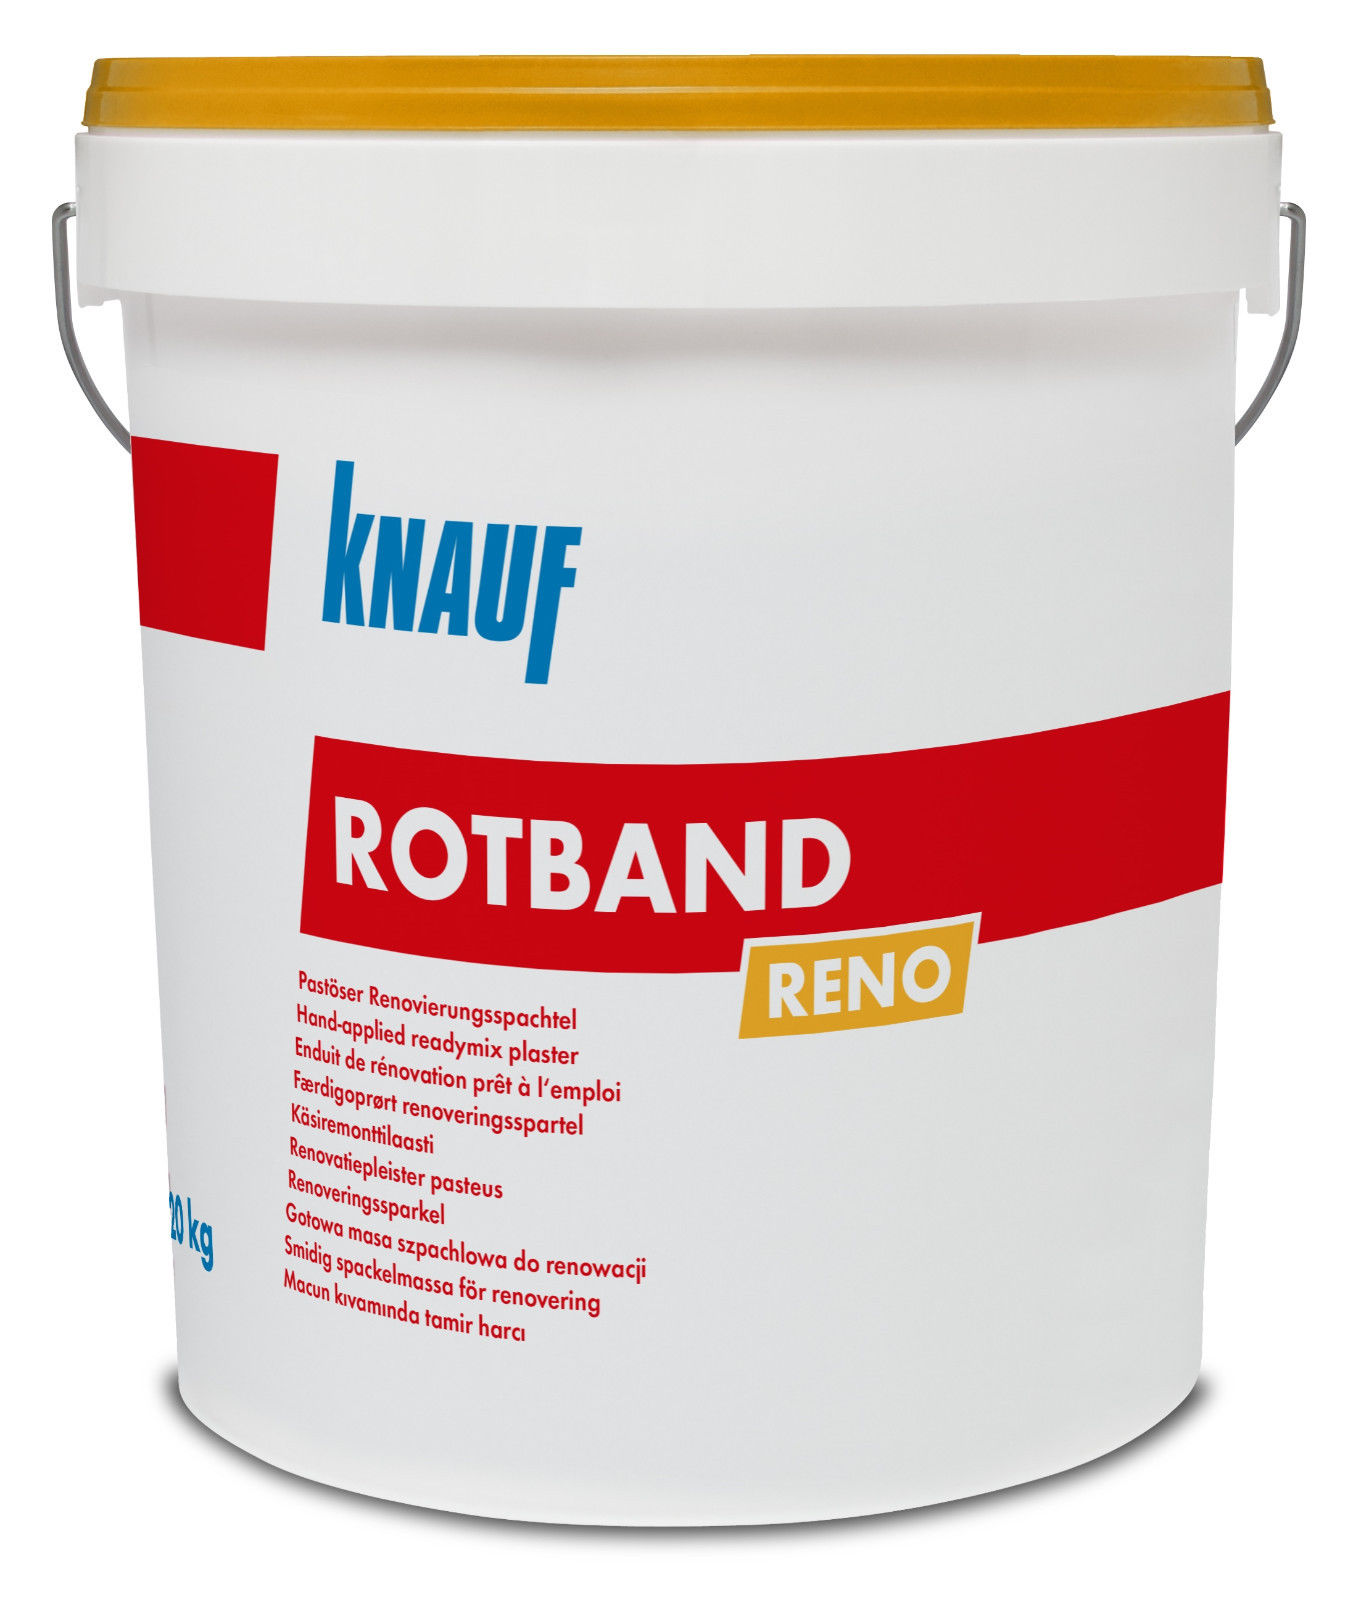 Knauf Rotband Reno Renovierspachtel 20 kg   Kaufland.de